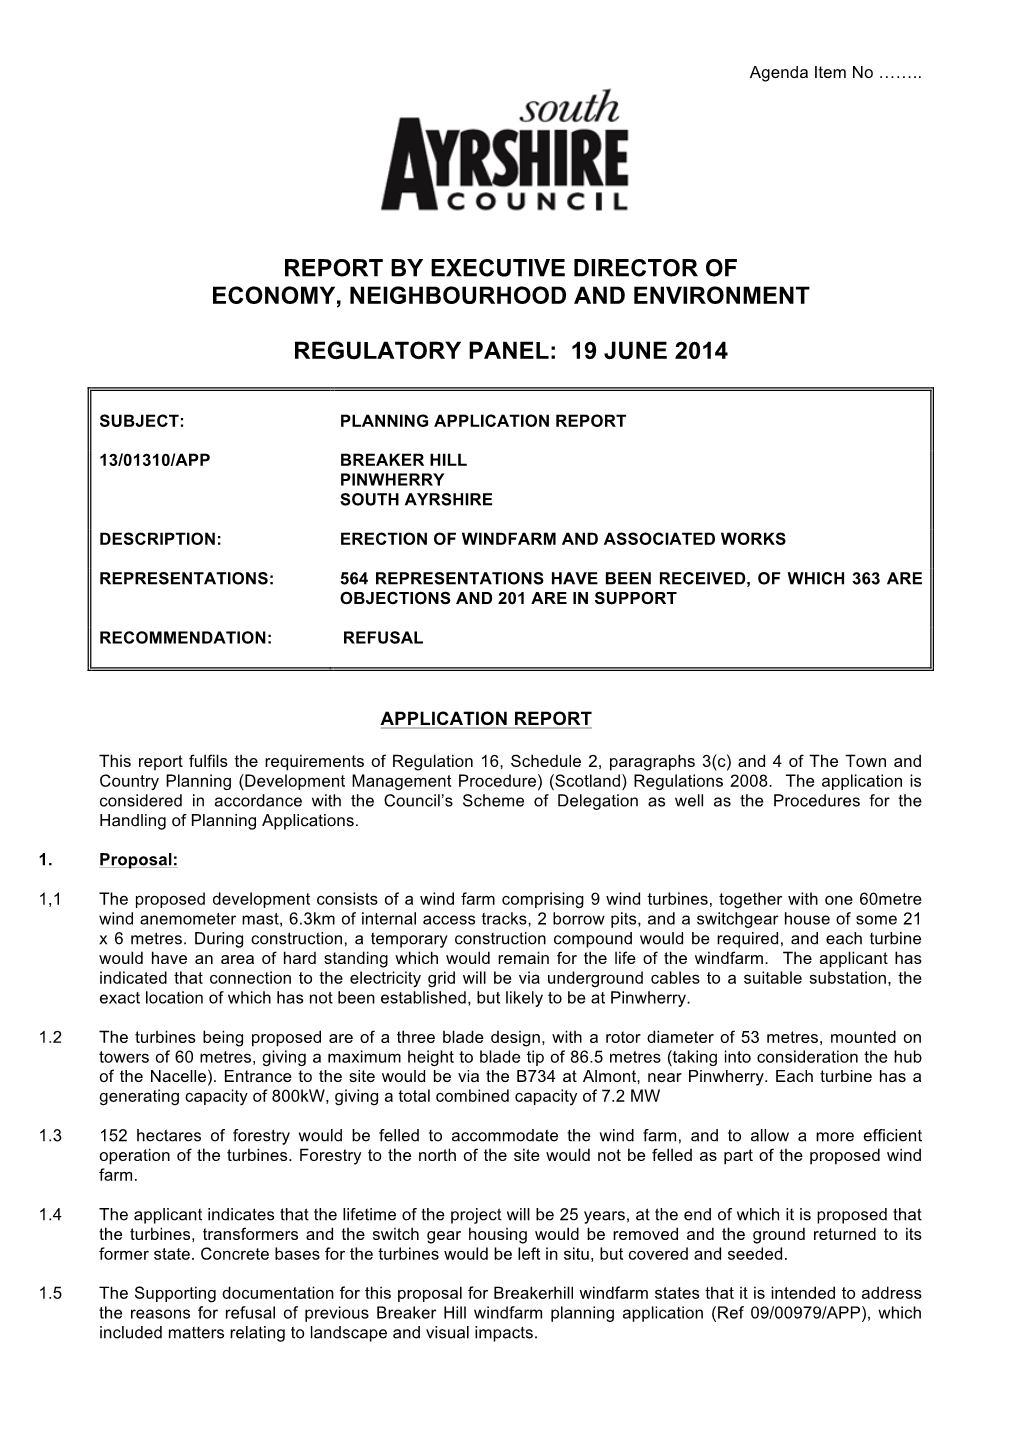 Report by Executive Director of Economy, Neighbourhood and Environment Regulatory Panel: 19 June 2014